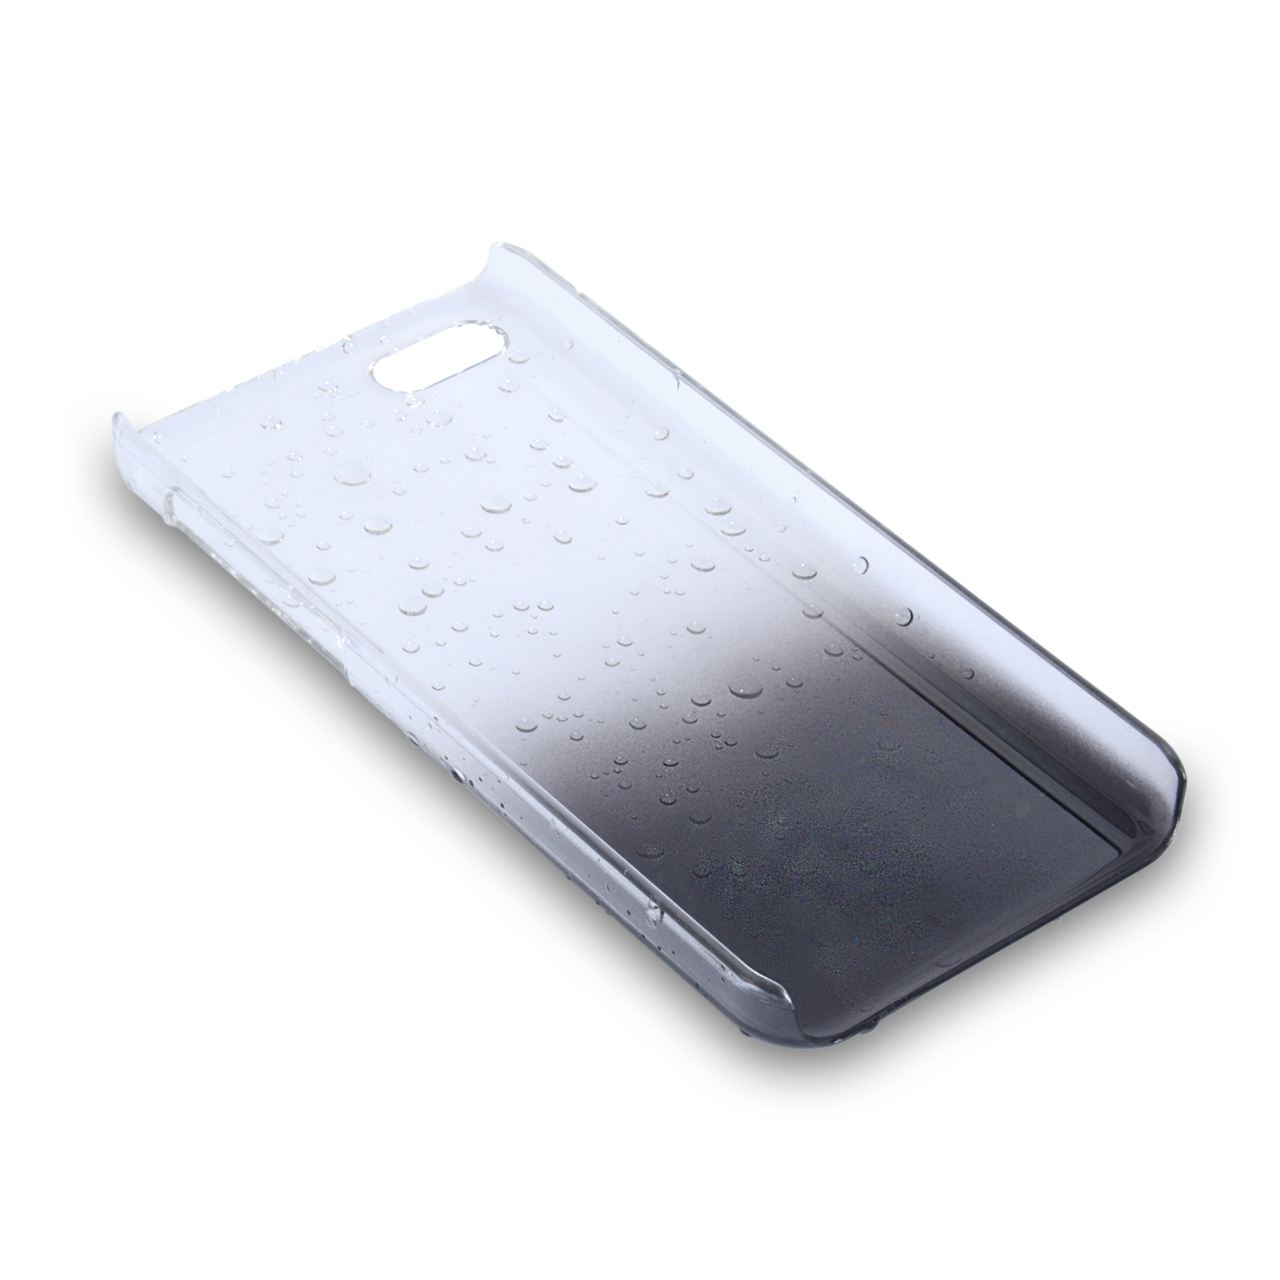 YouSave Accessories iPhone 5C Raindrop Hard Case - Black